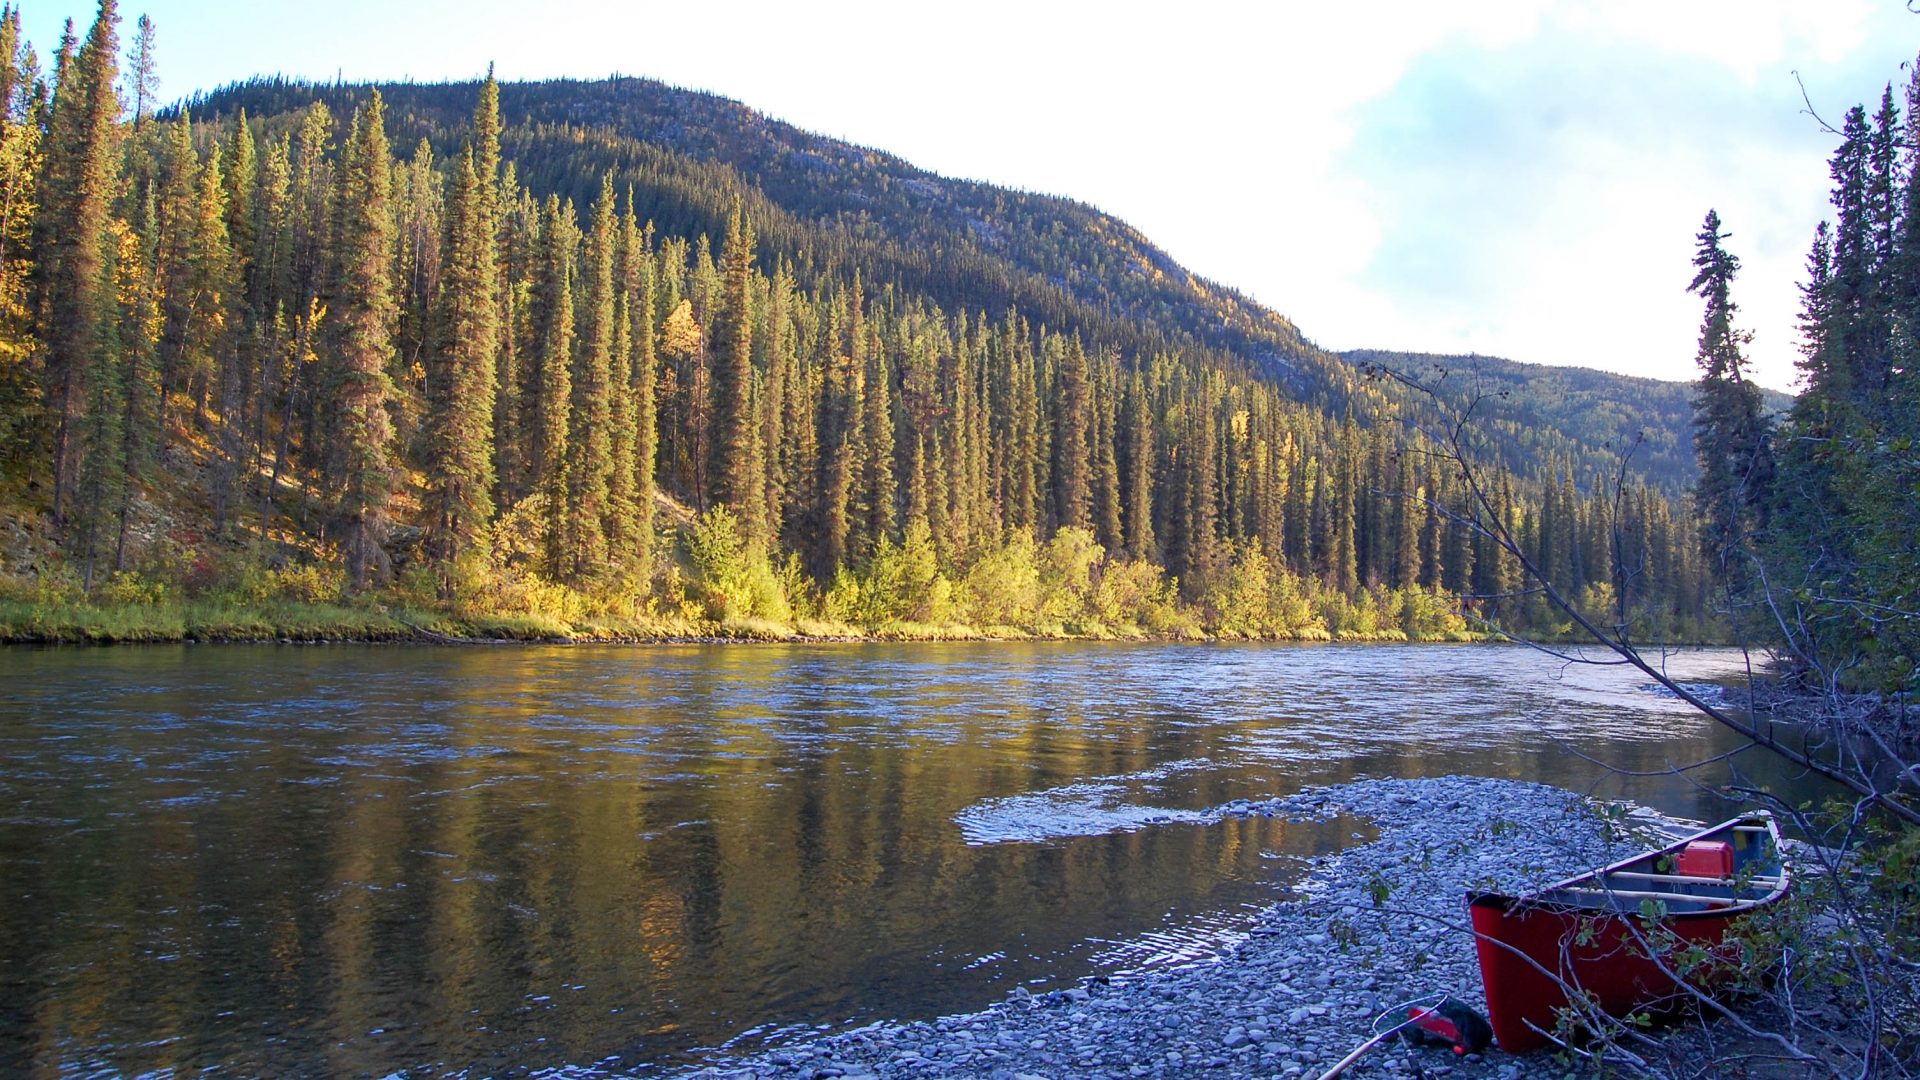 The Klondiker - Big Salmon River - stunning landscape